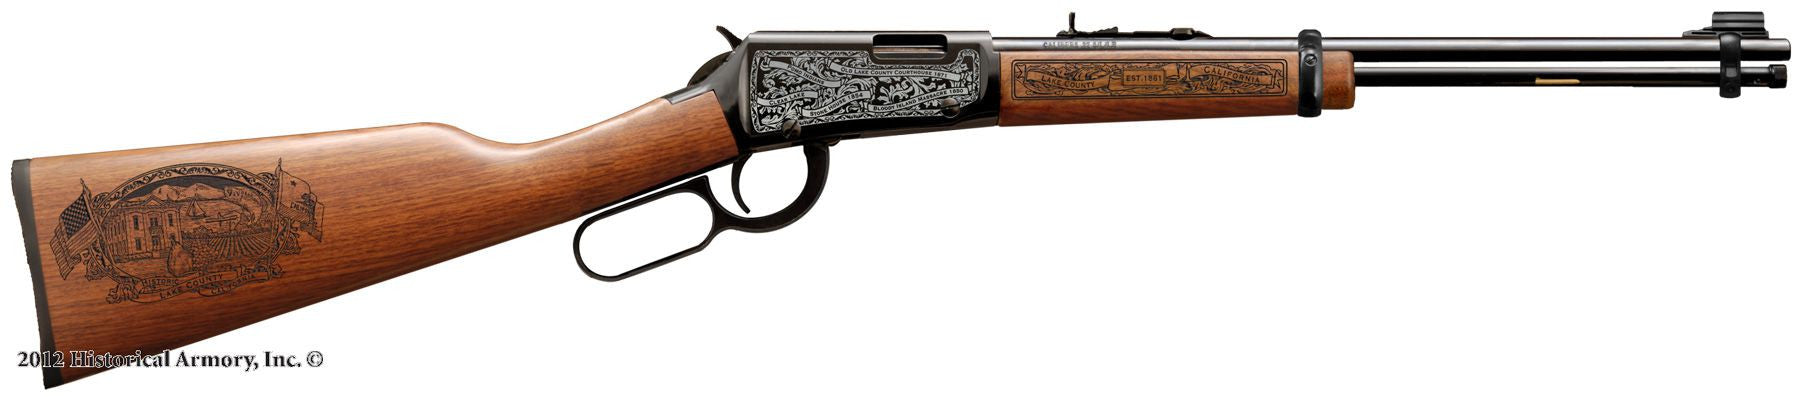 Lake county california engraved rifle H001